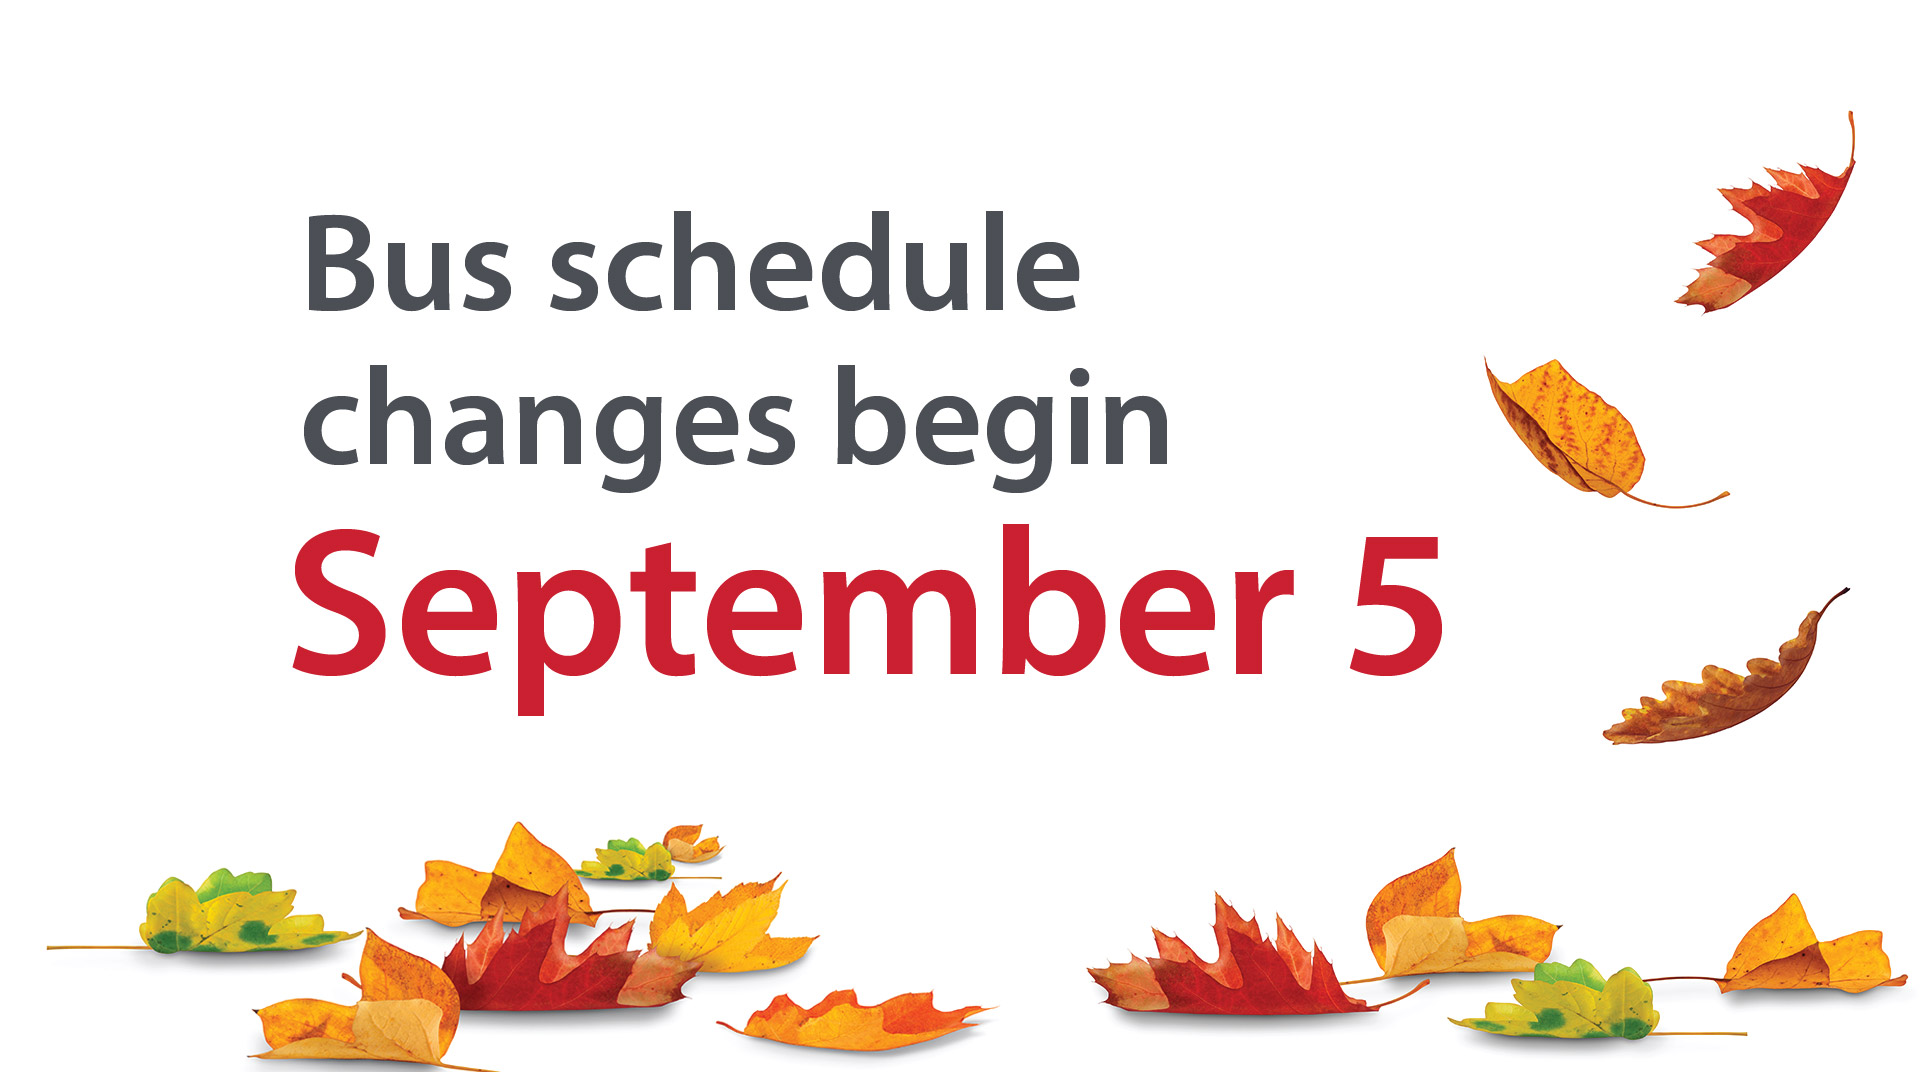 Fall service changes begin September 5